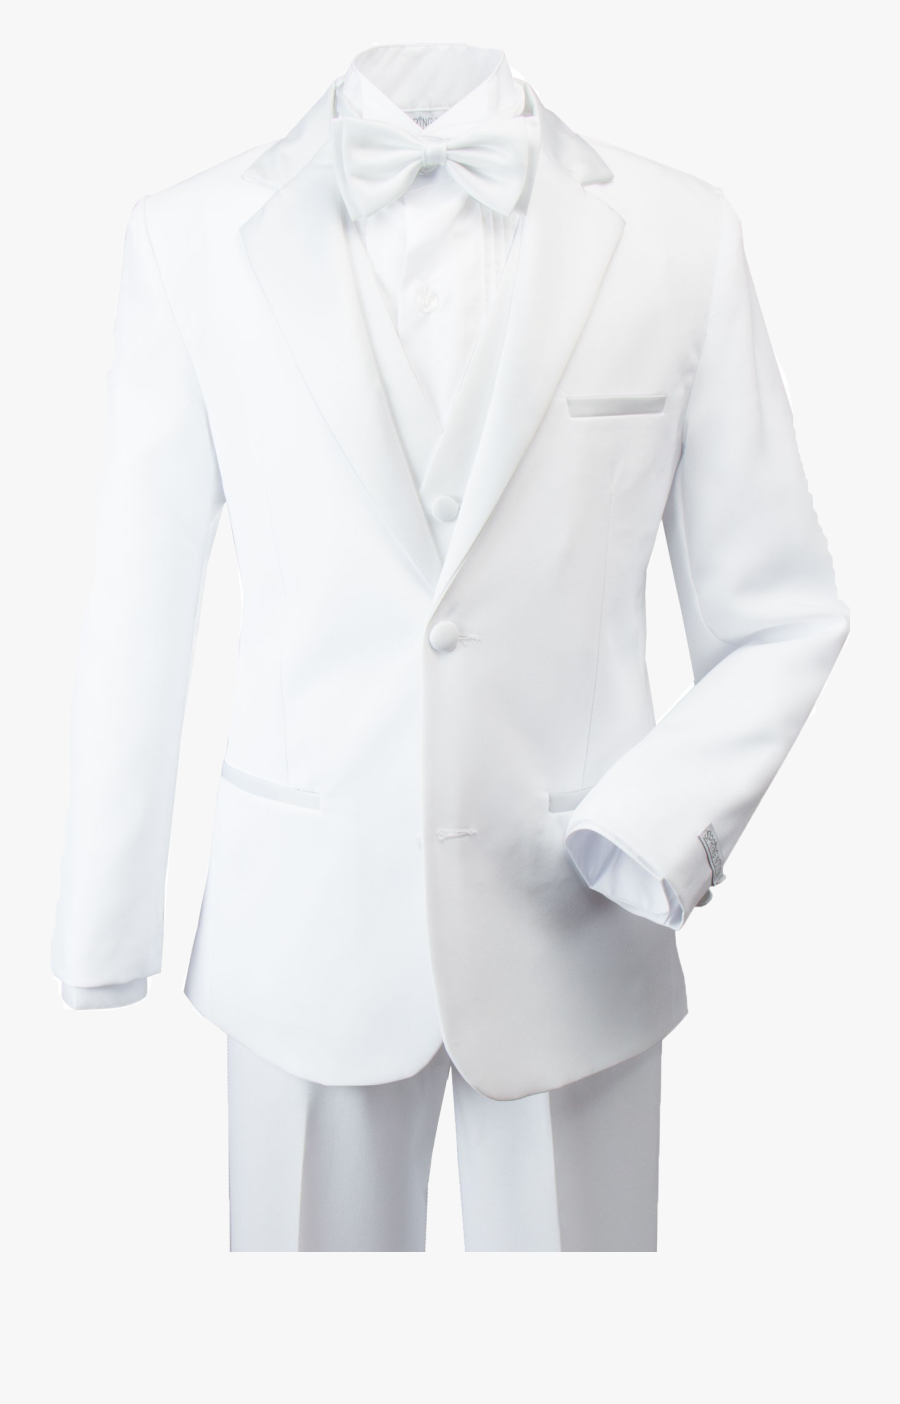 White Tuxedo Suit Png Free Pic - Tuxedo, Transparent Clipart